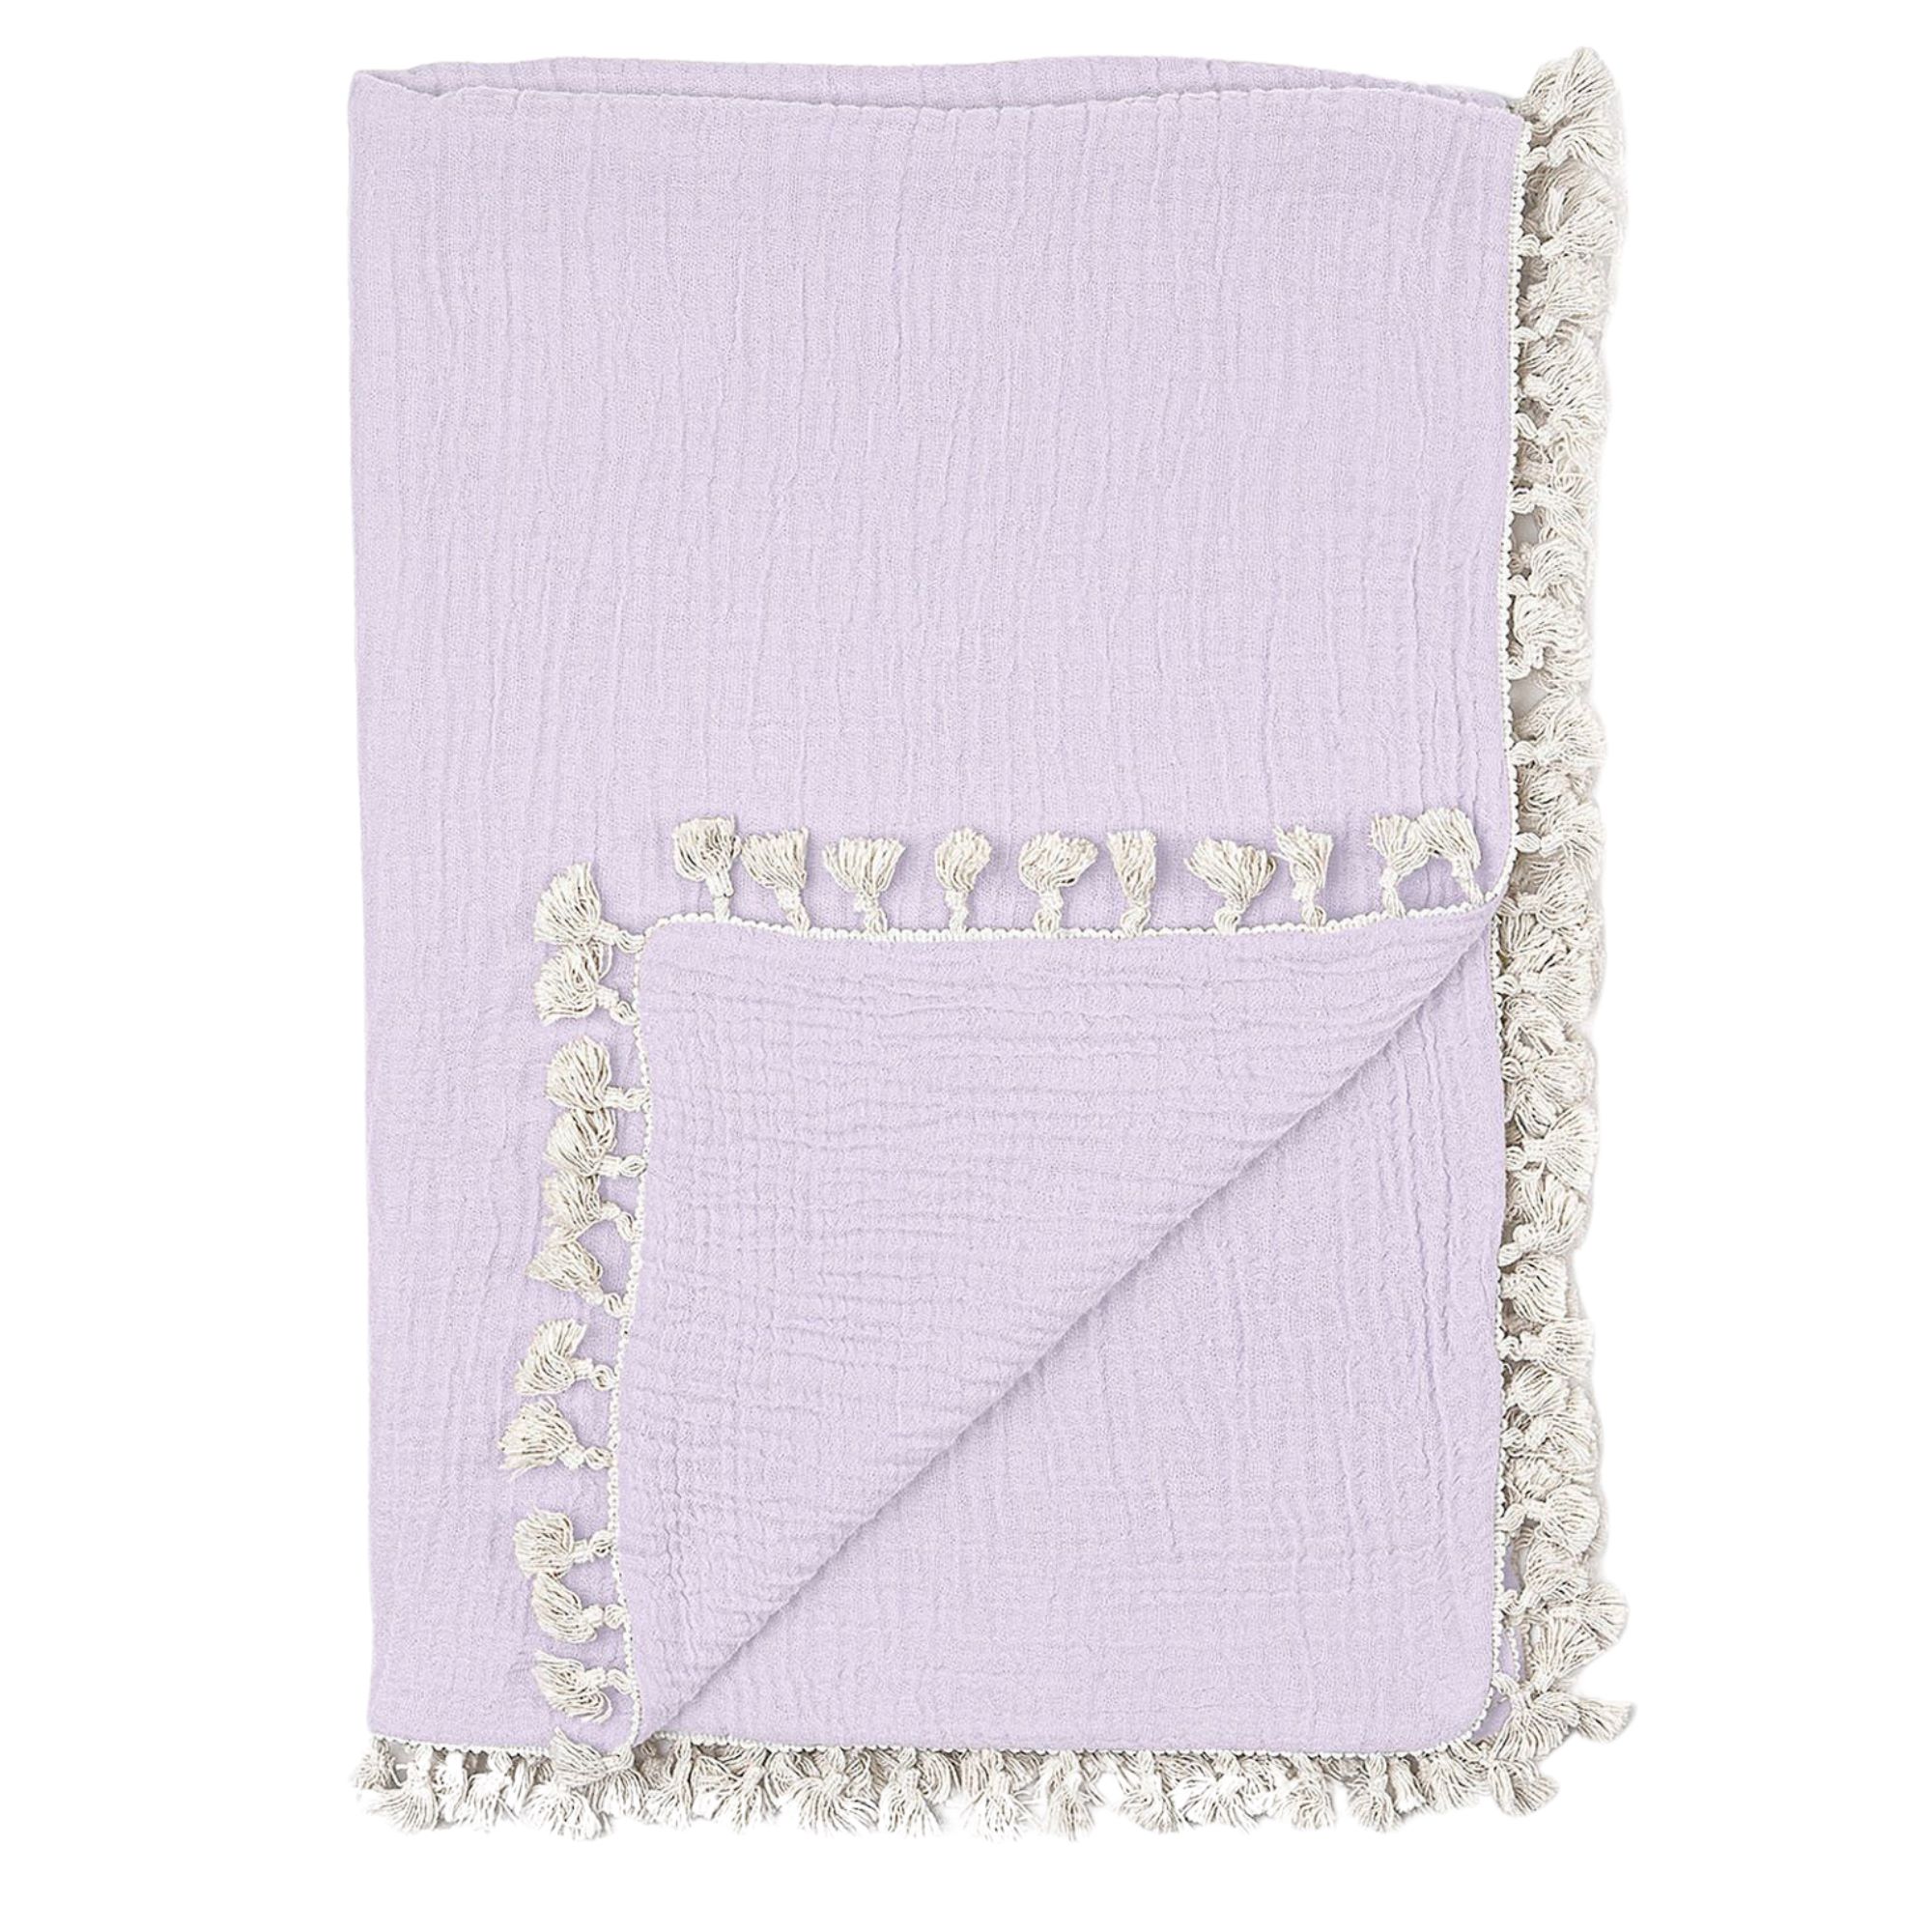 Purple muslin blanket on white background